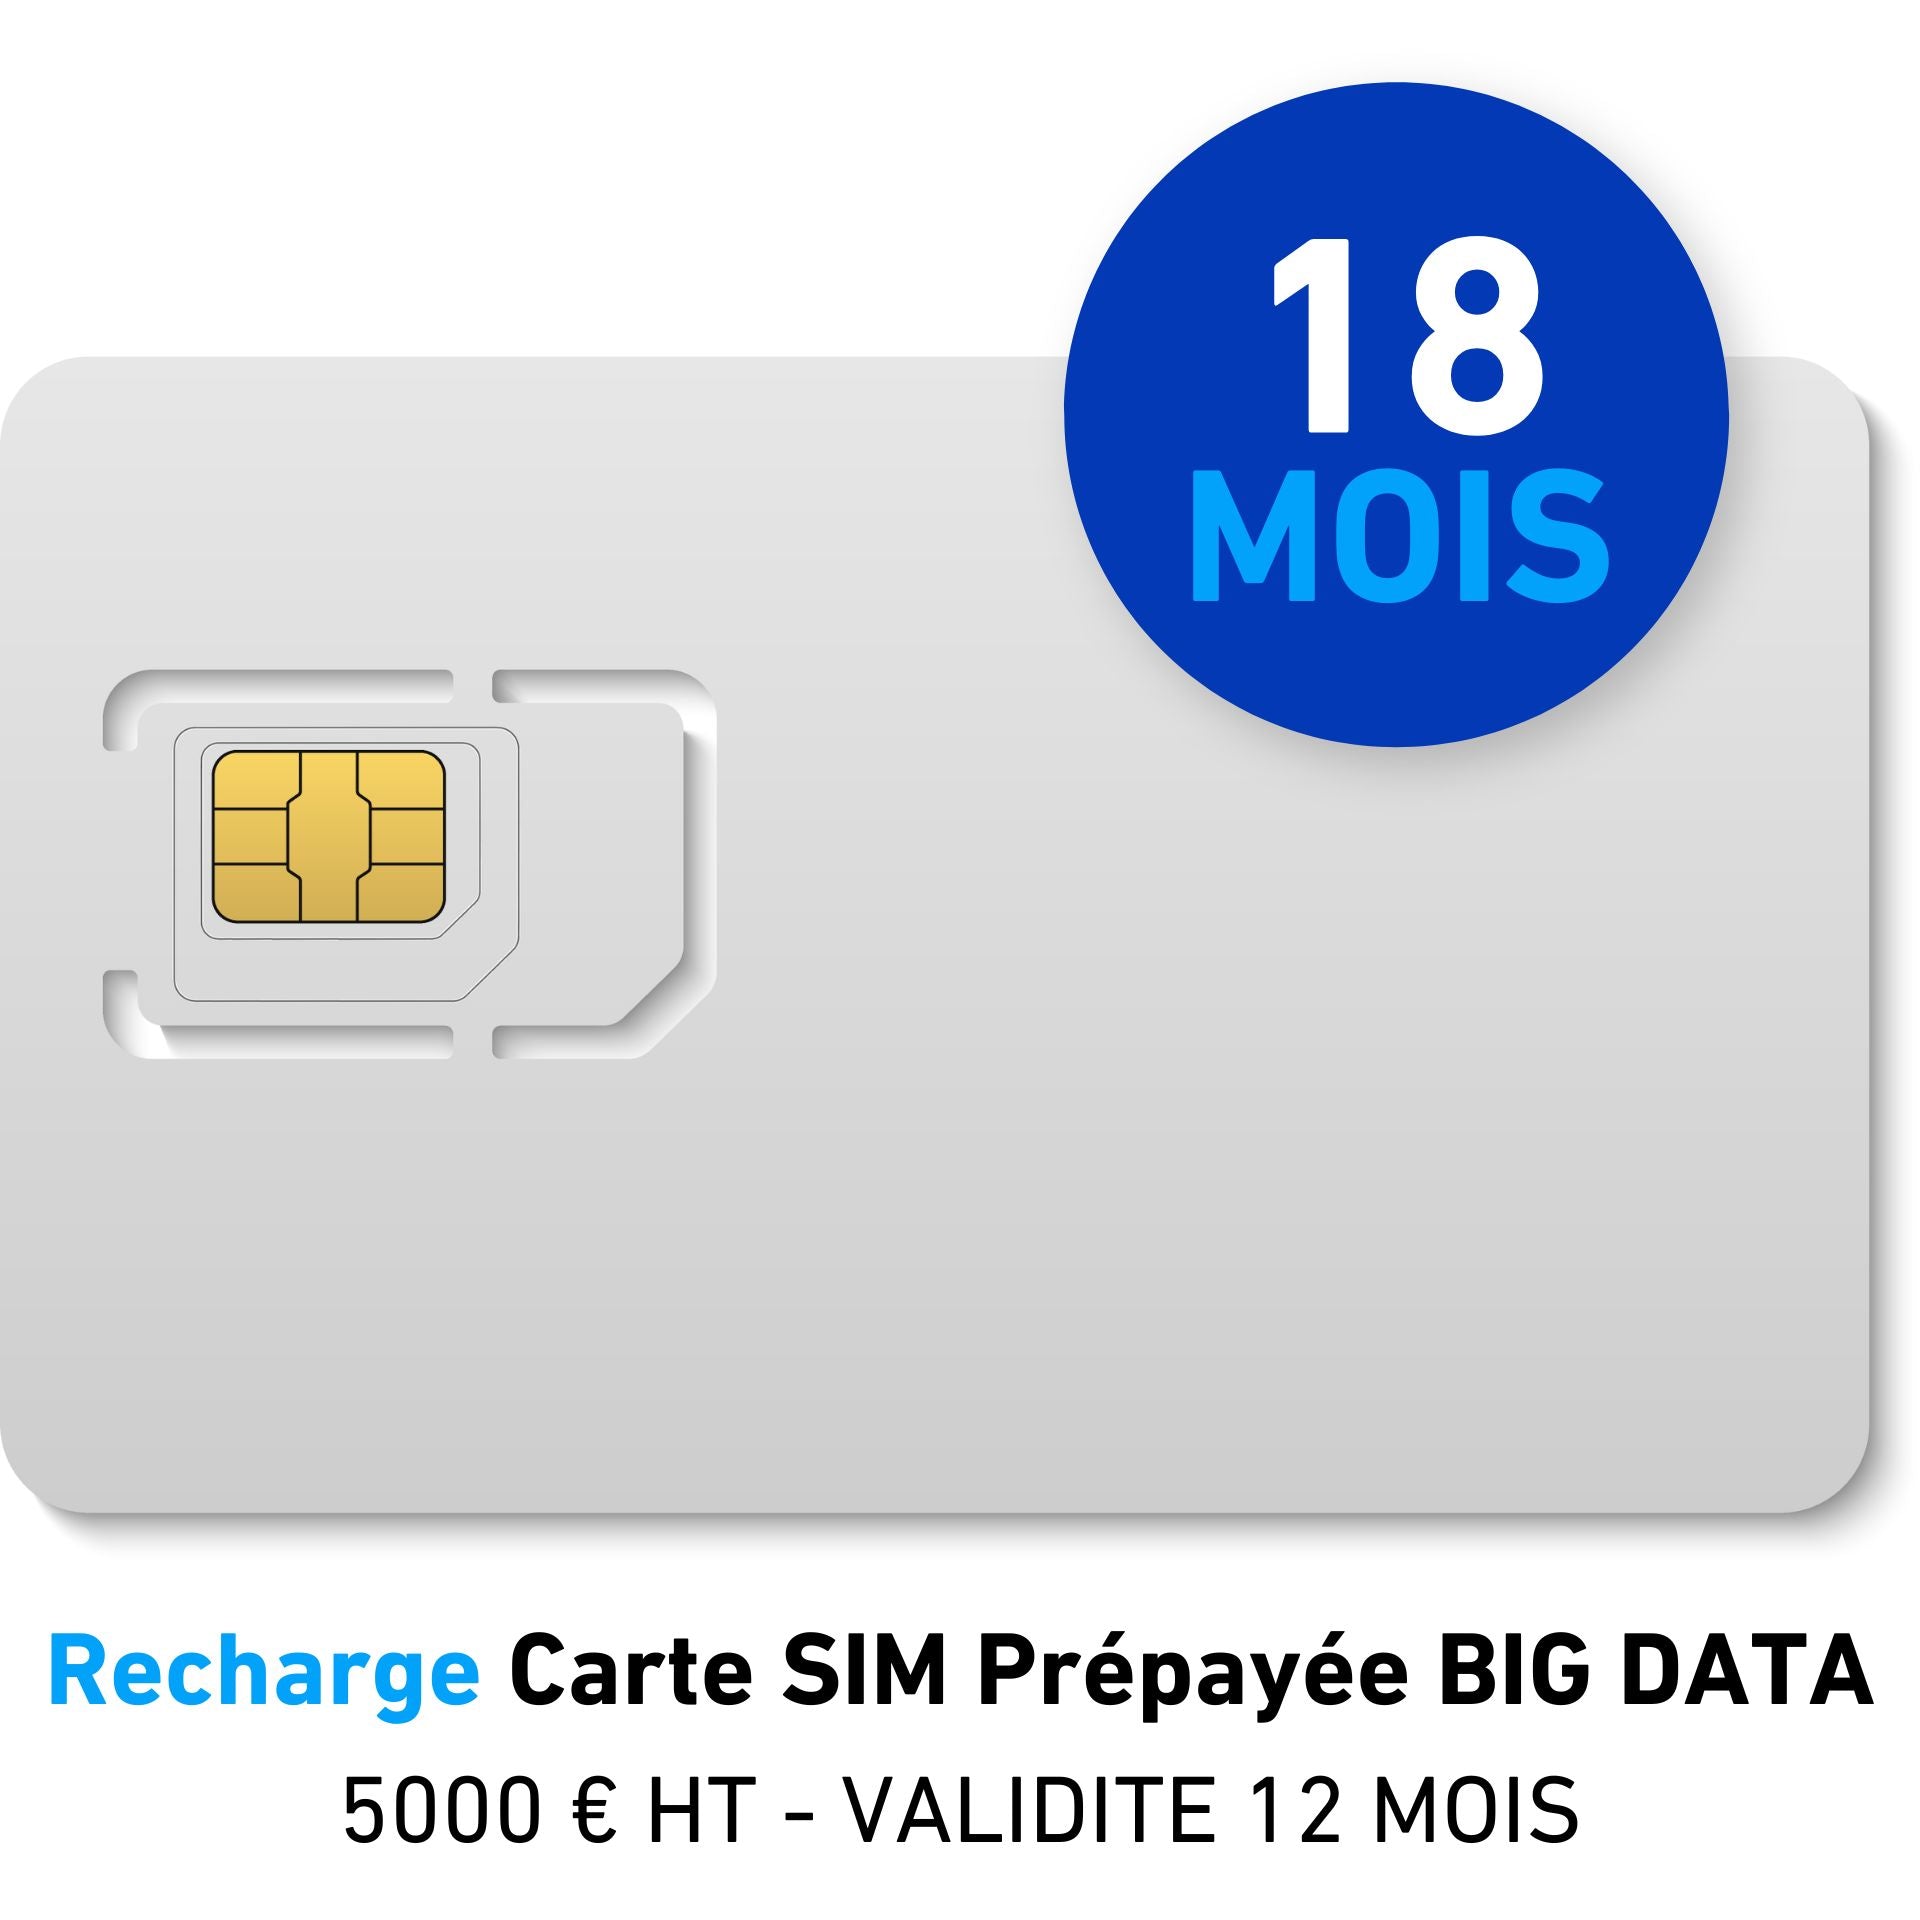 Recarga de tarjeta SIM de prepago Grandes Datos 5000 € HT - VALIDEZ 18 MESES